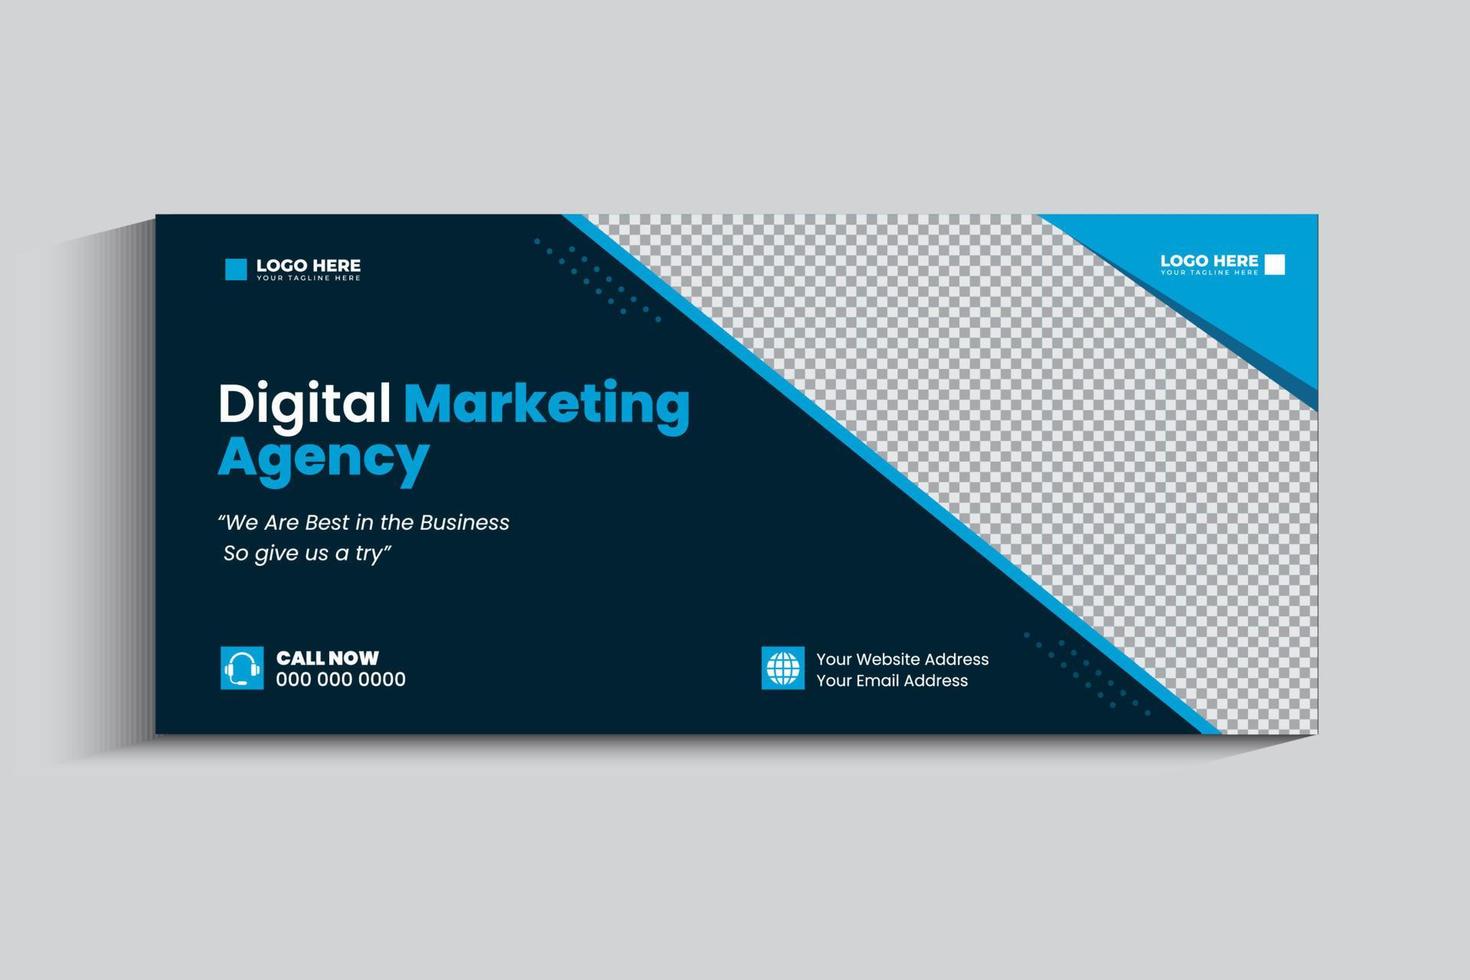 Digital Marketing Agency cover banner for social media vector